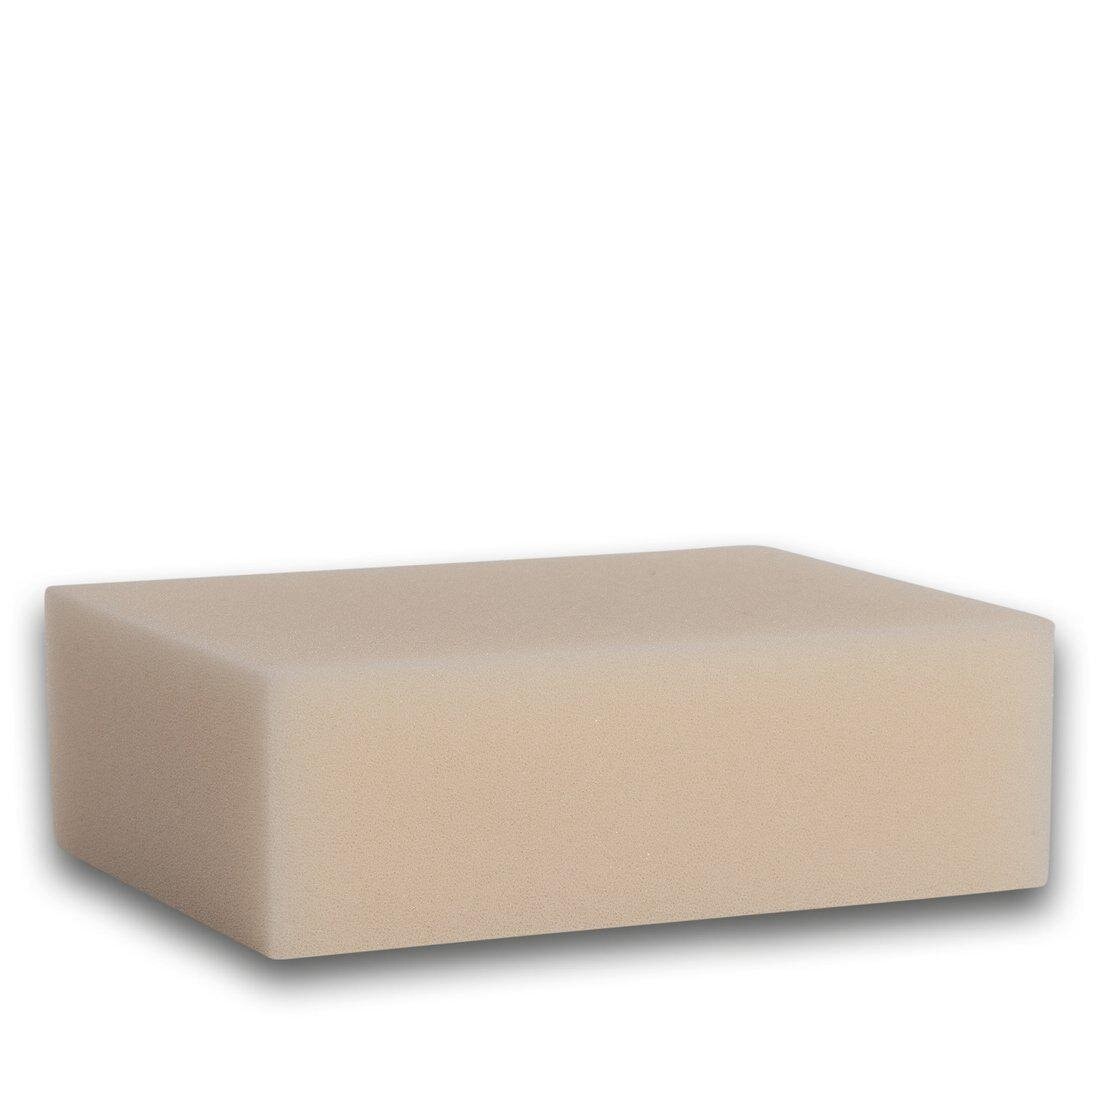 Polishing sponge for leather - 5-pack